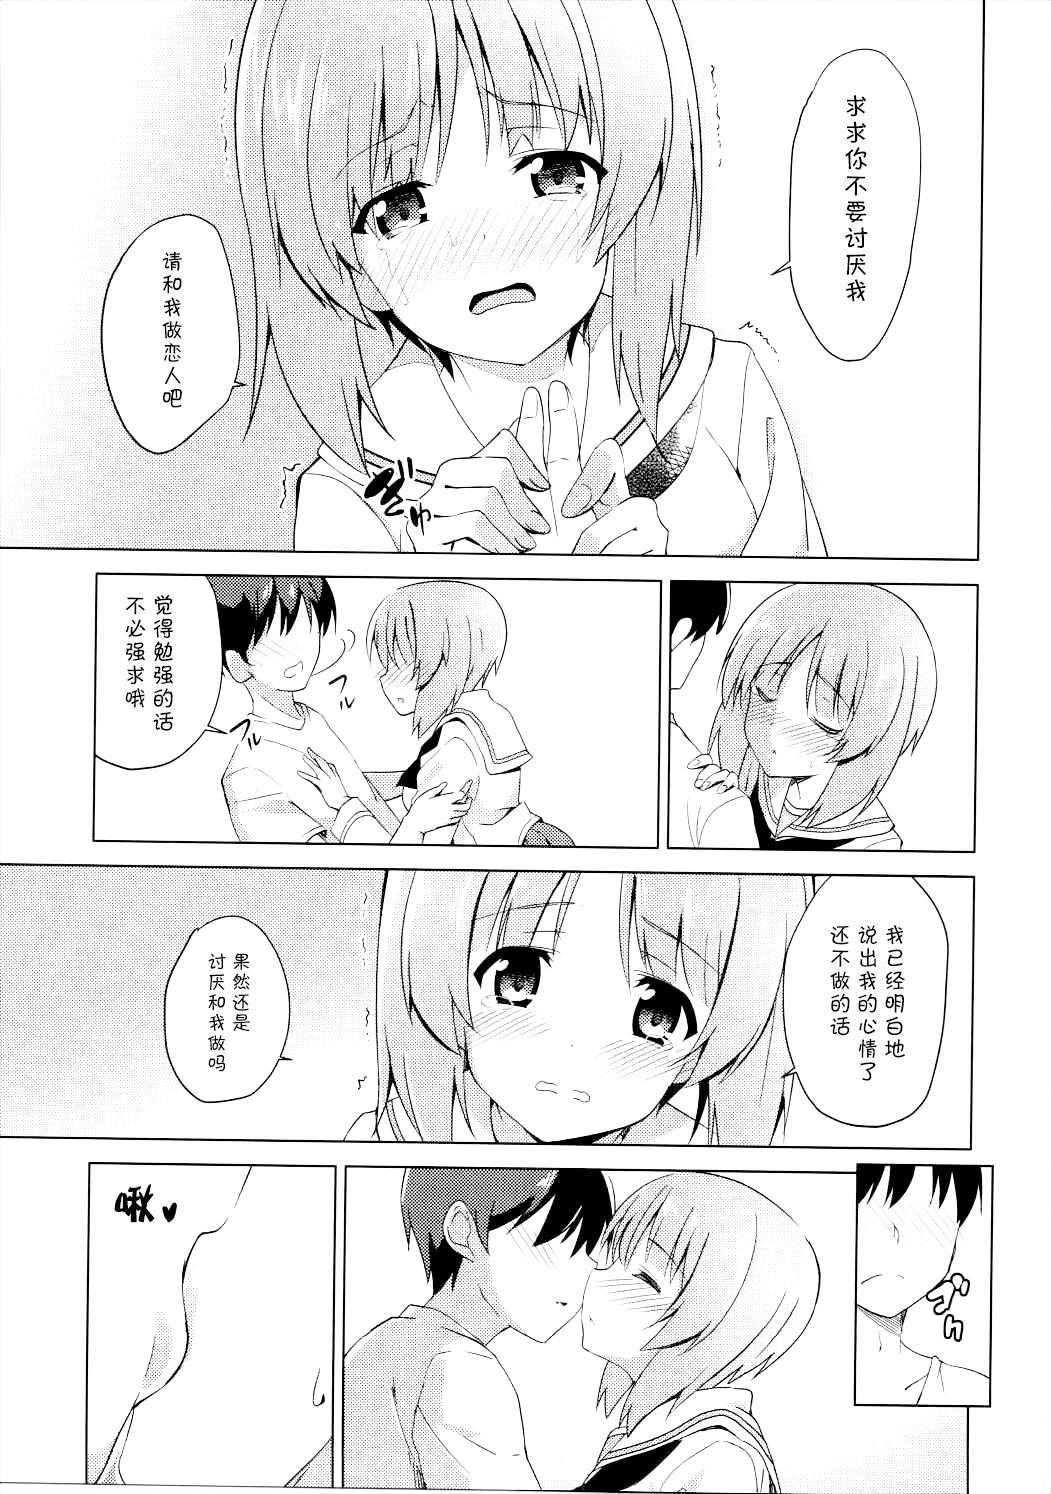 Couple Fucking Watashi, Motto Ganbarimasu! - I will do my best more! - Girls und panzer Whipping - Page 9